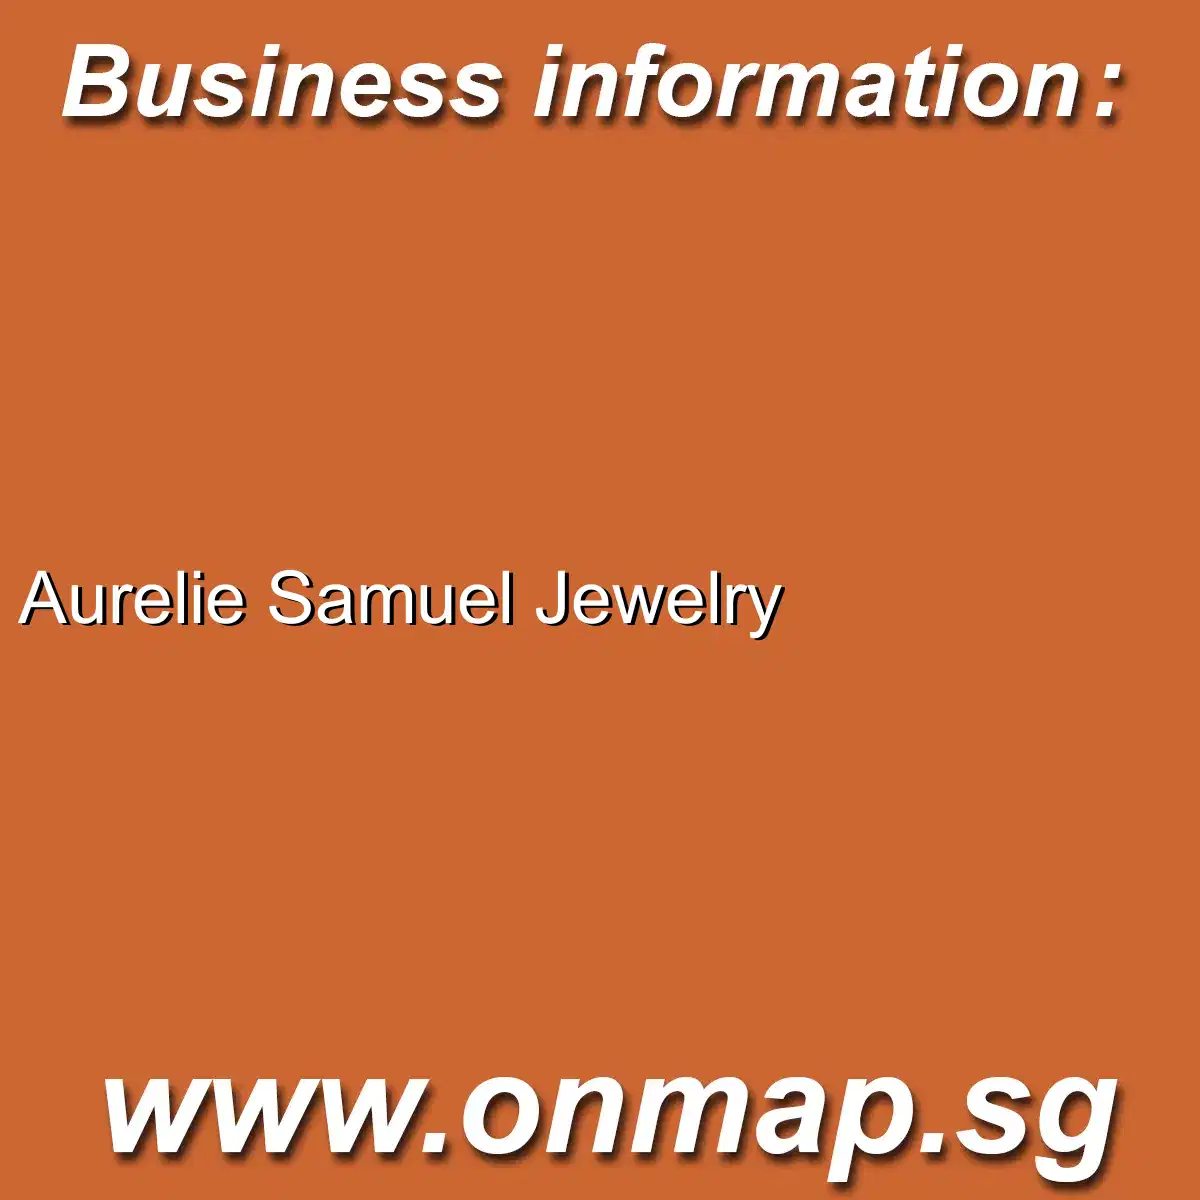 Aurelie Samuel Jewelry - Details, Locations, Reviews